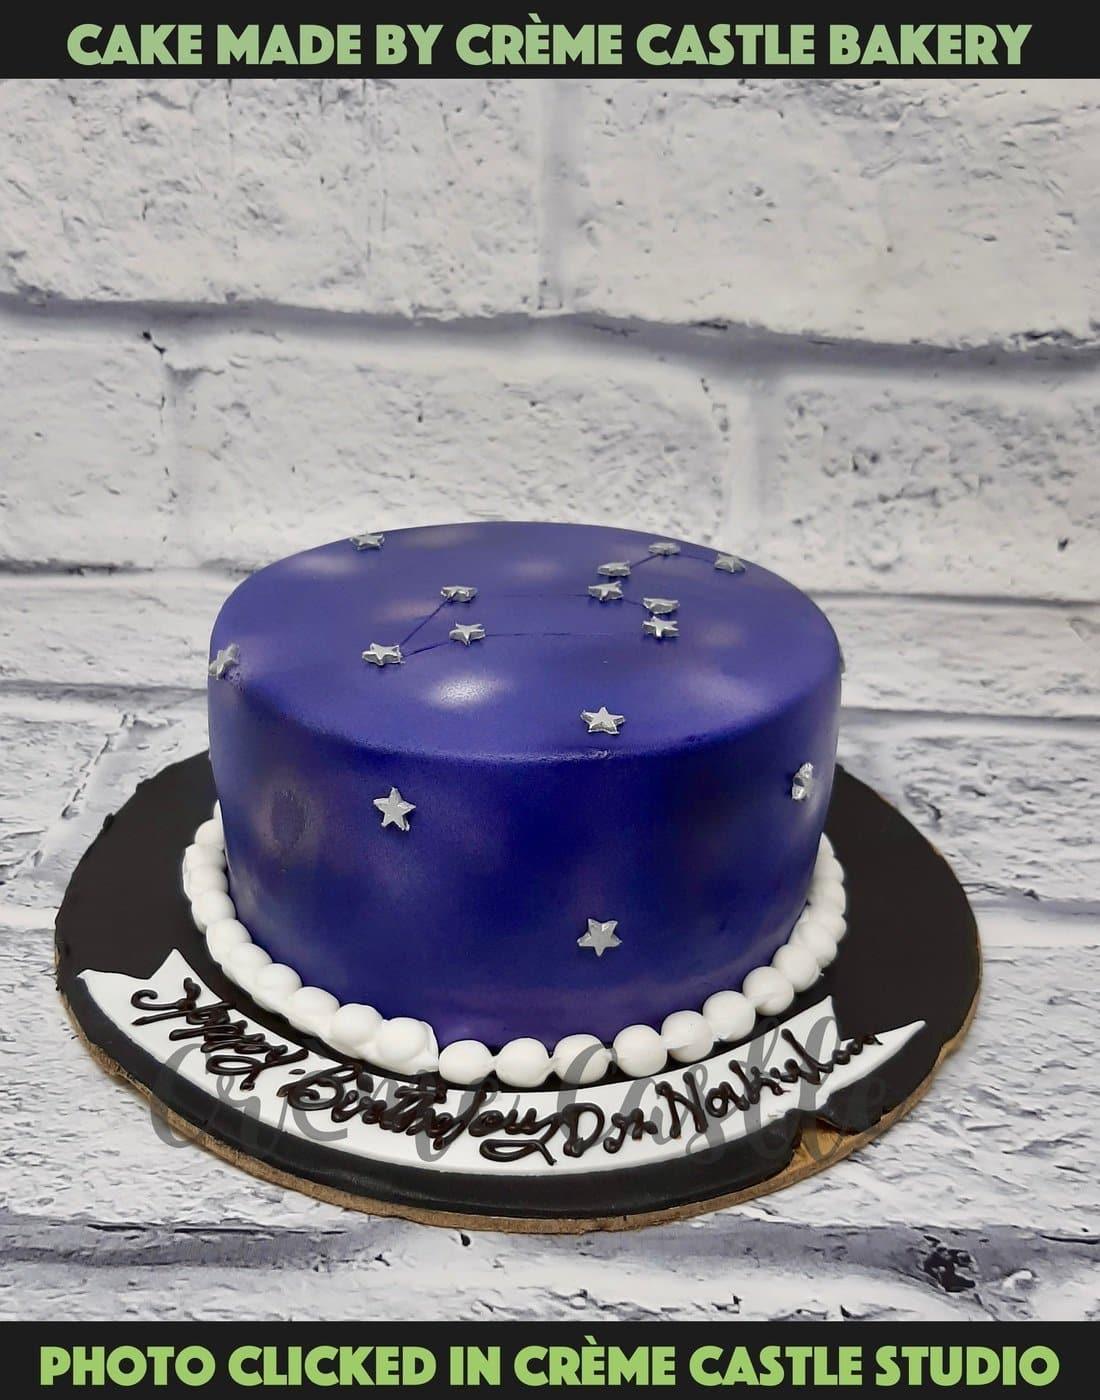 Up Inspired Anniversary Cake - Cook. Craft. Love.